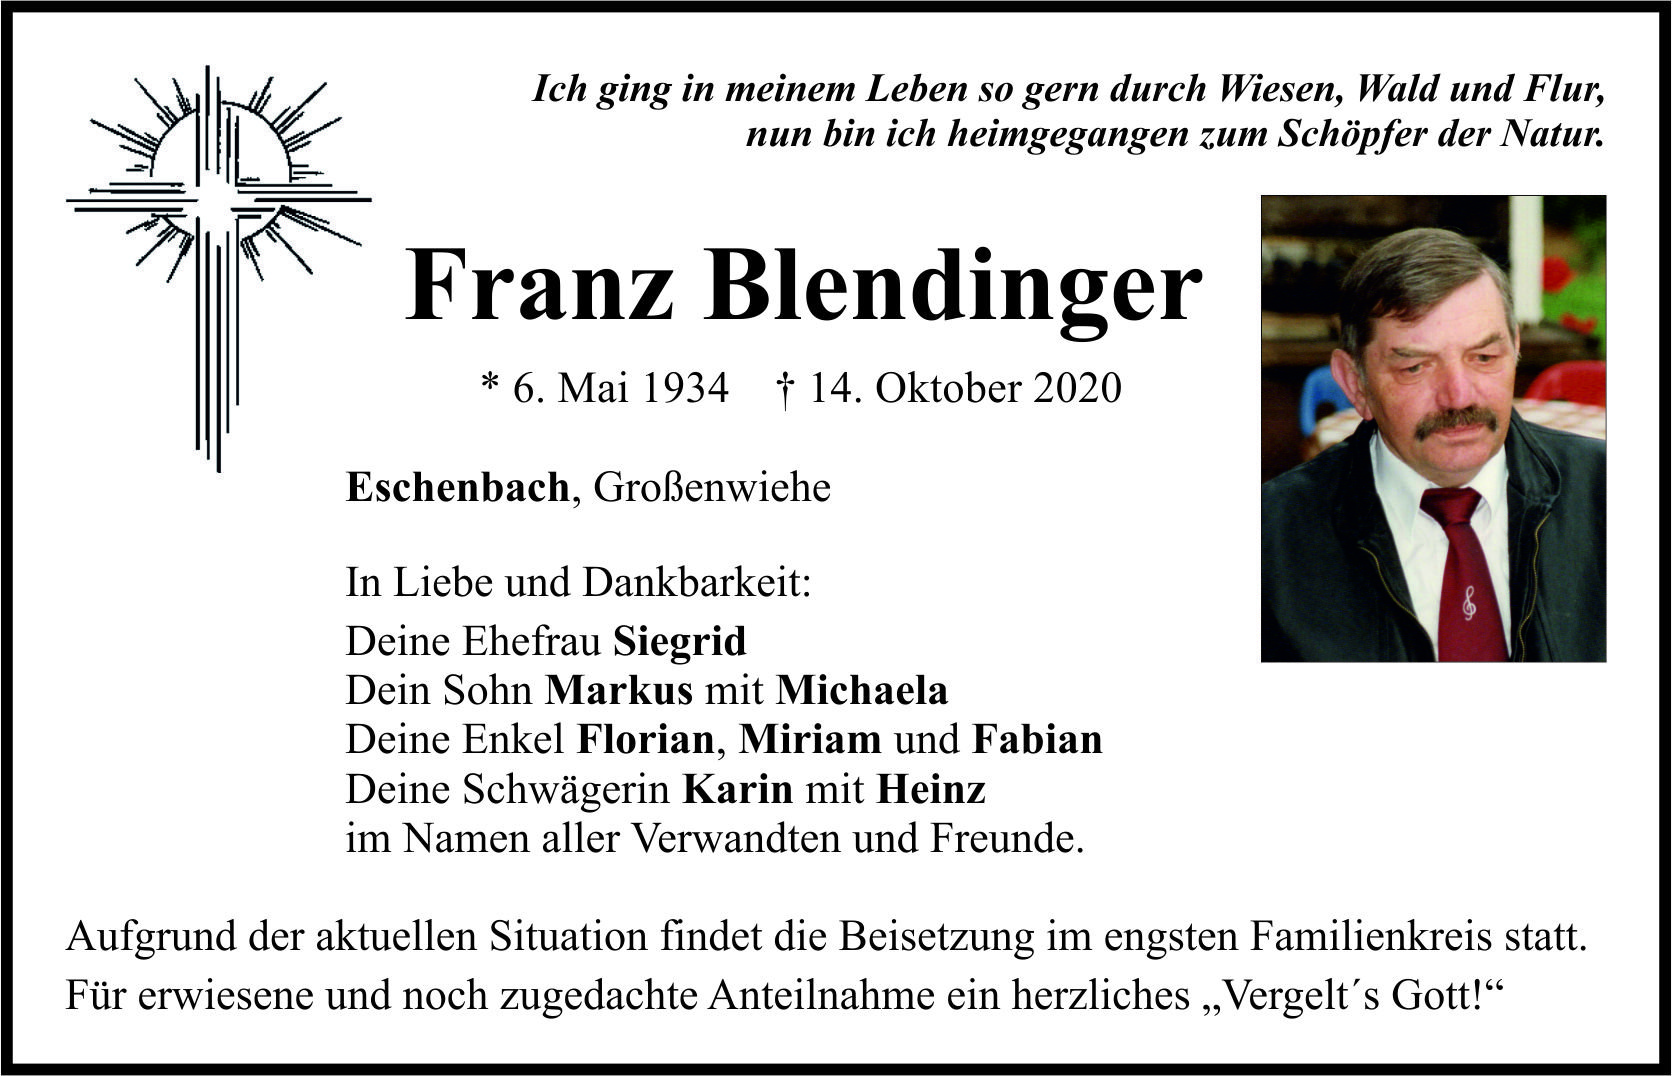 Traueranzeige Franz Blendinger, Eschenbach